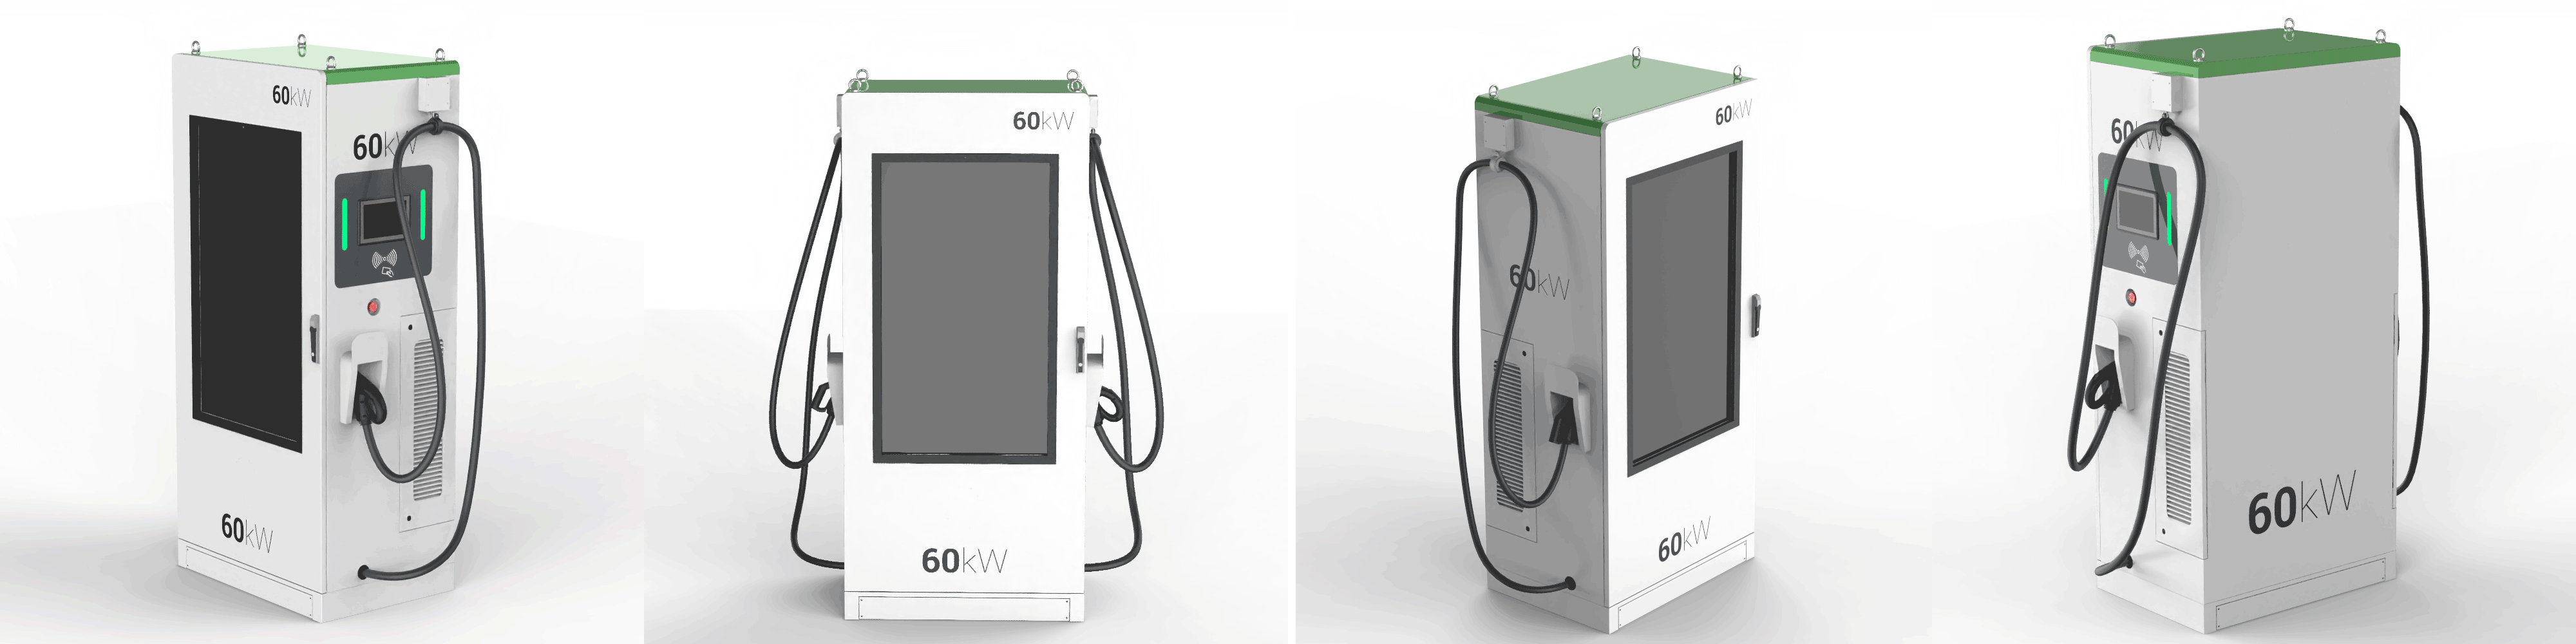 60kw advertising display charging station views